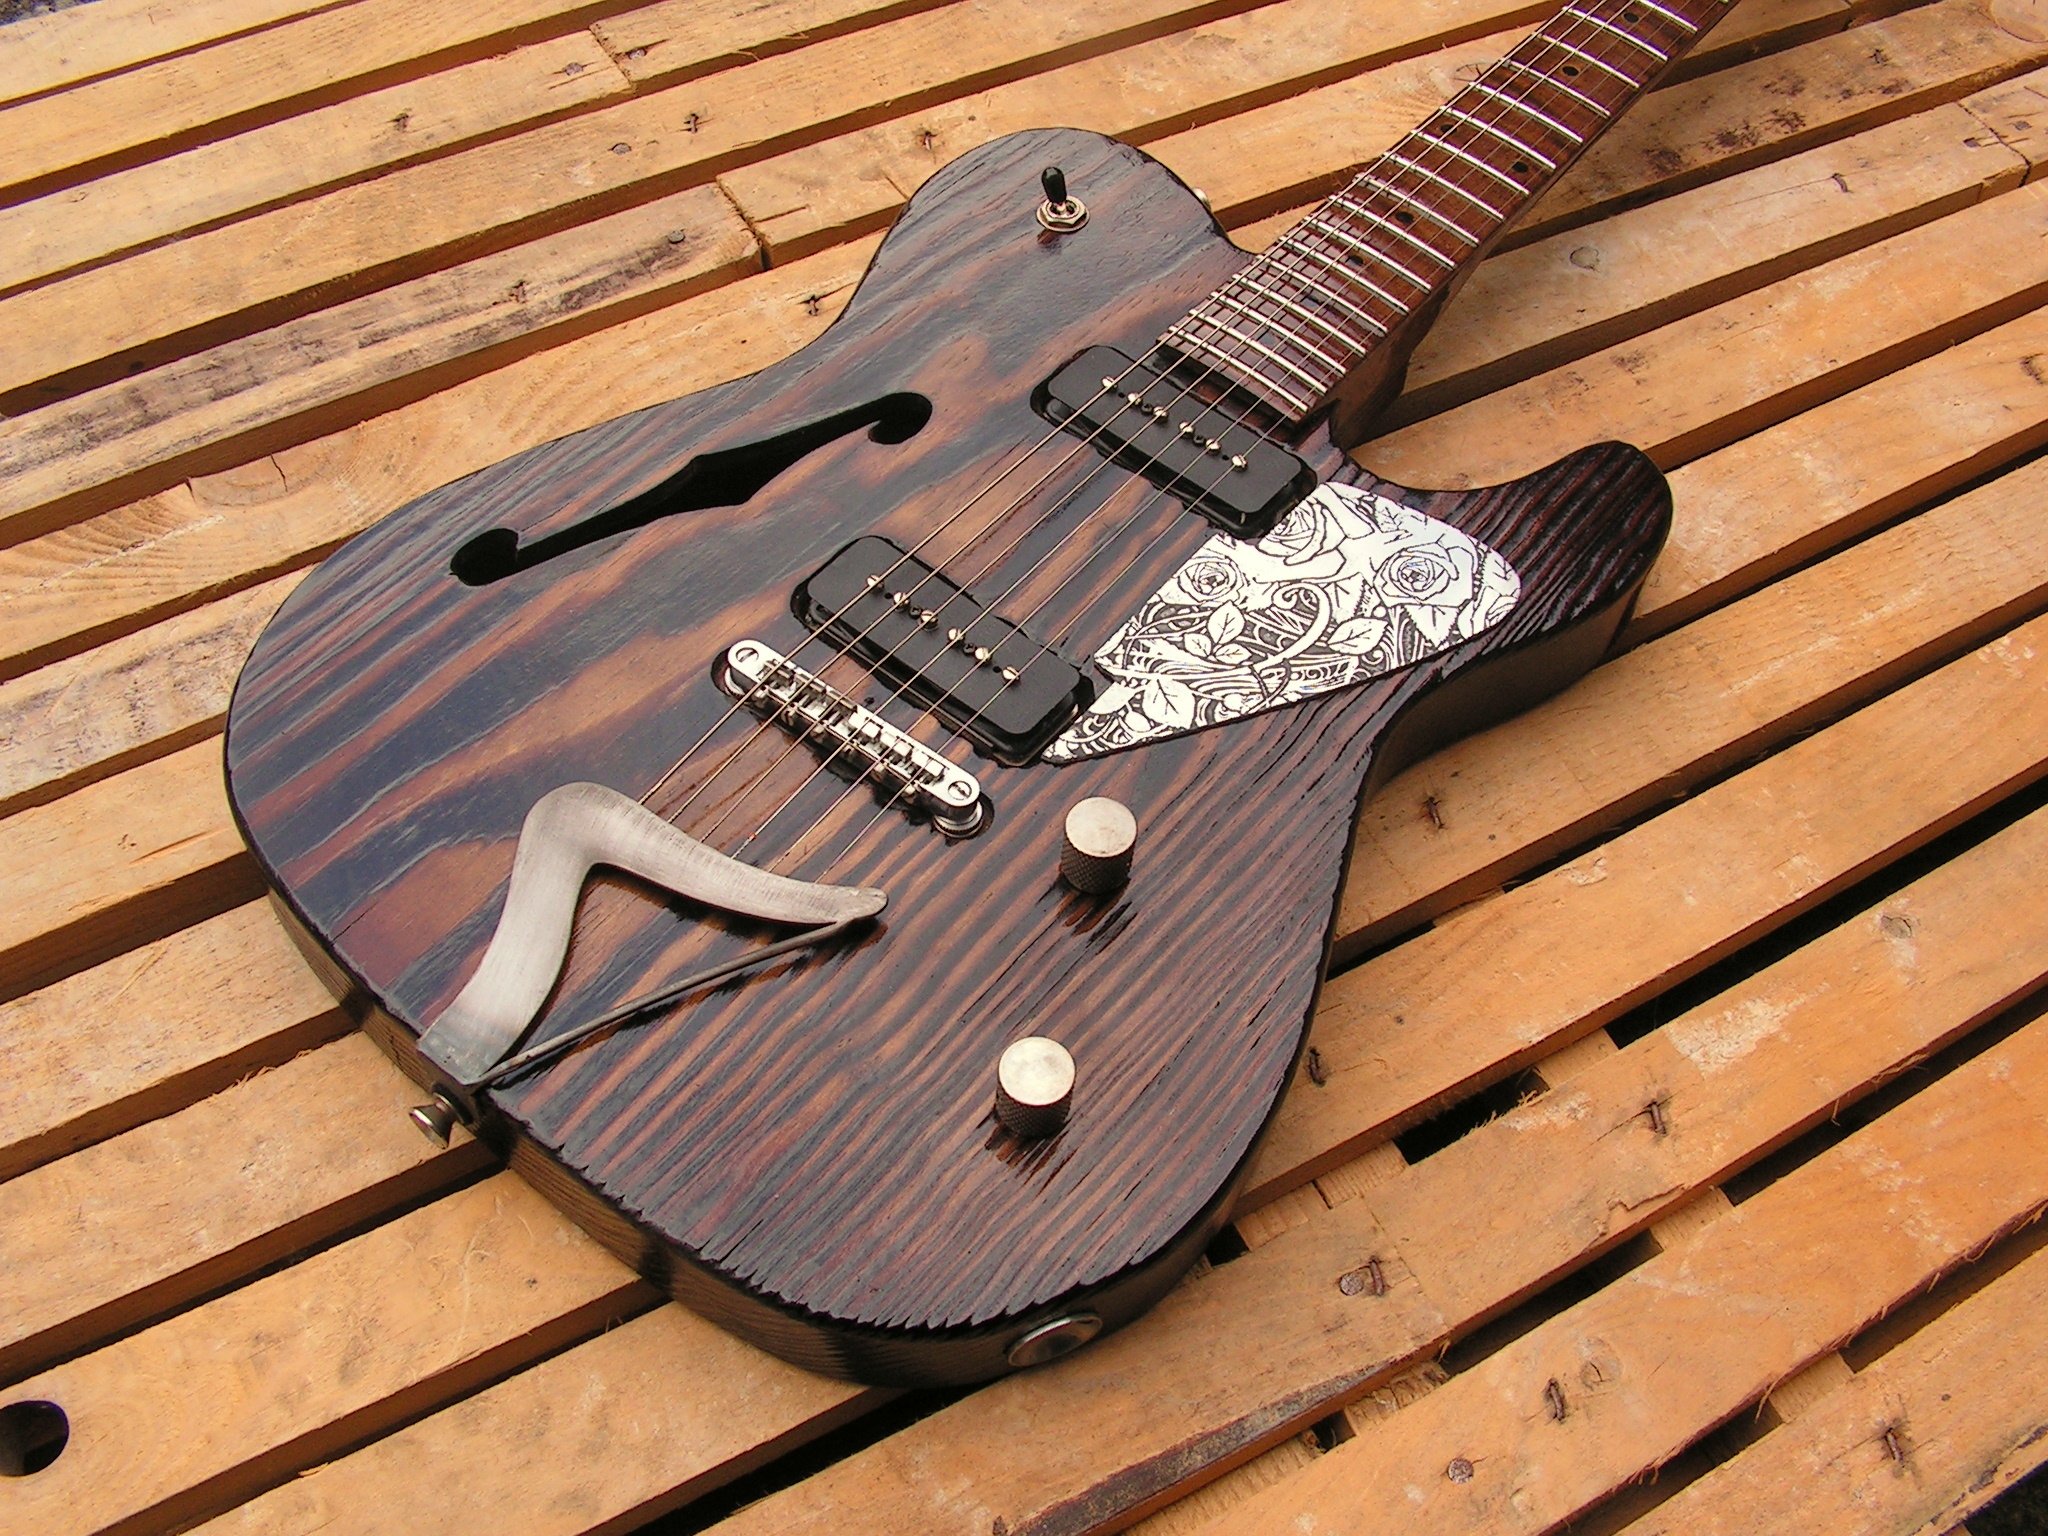 Body di una chitarra Telecaster Thinline in pino roasted